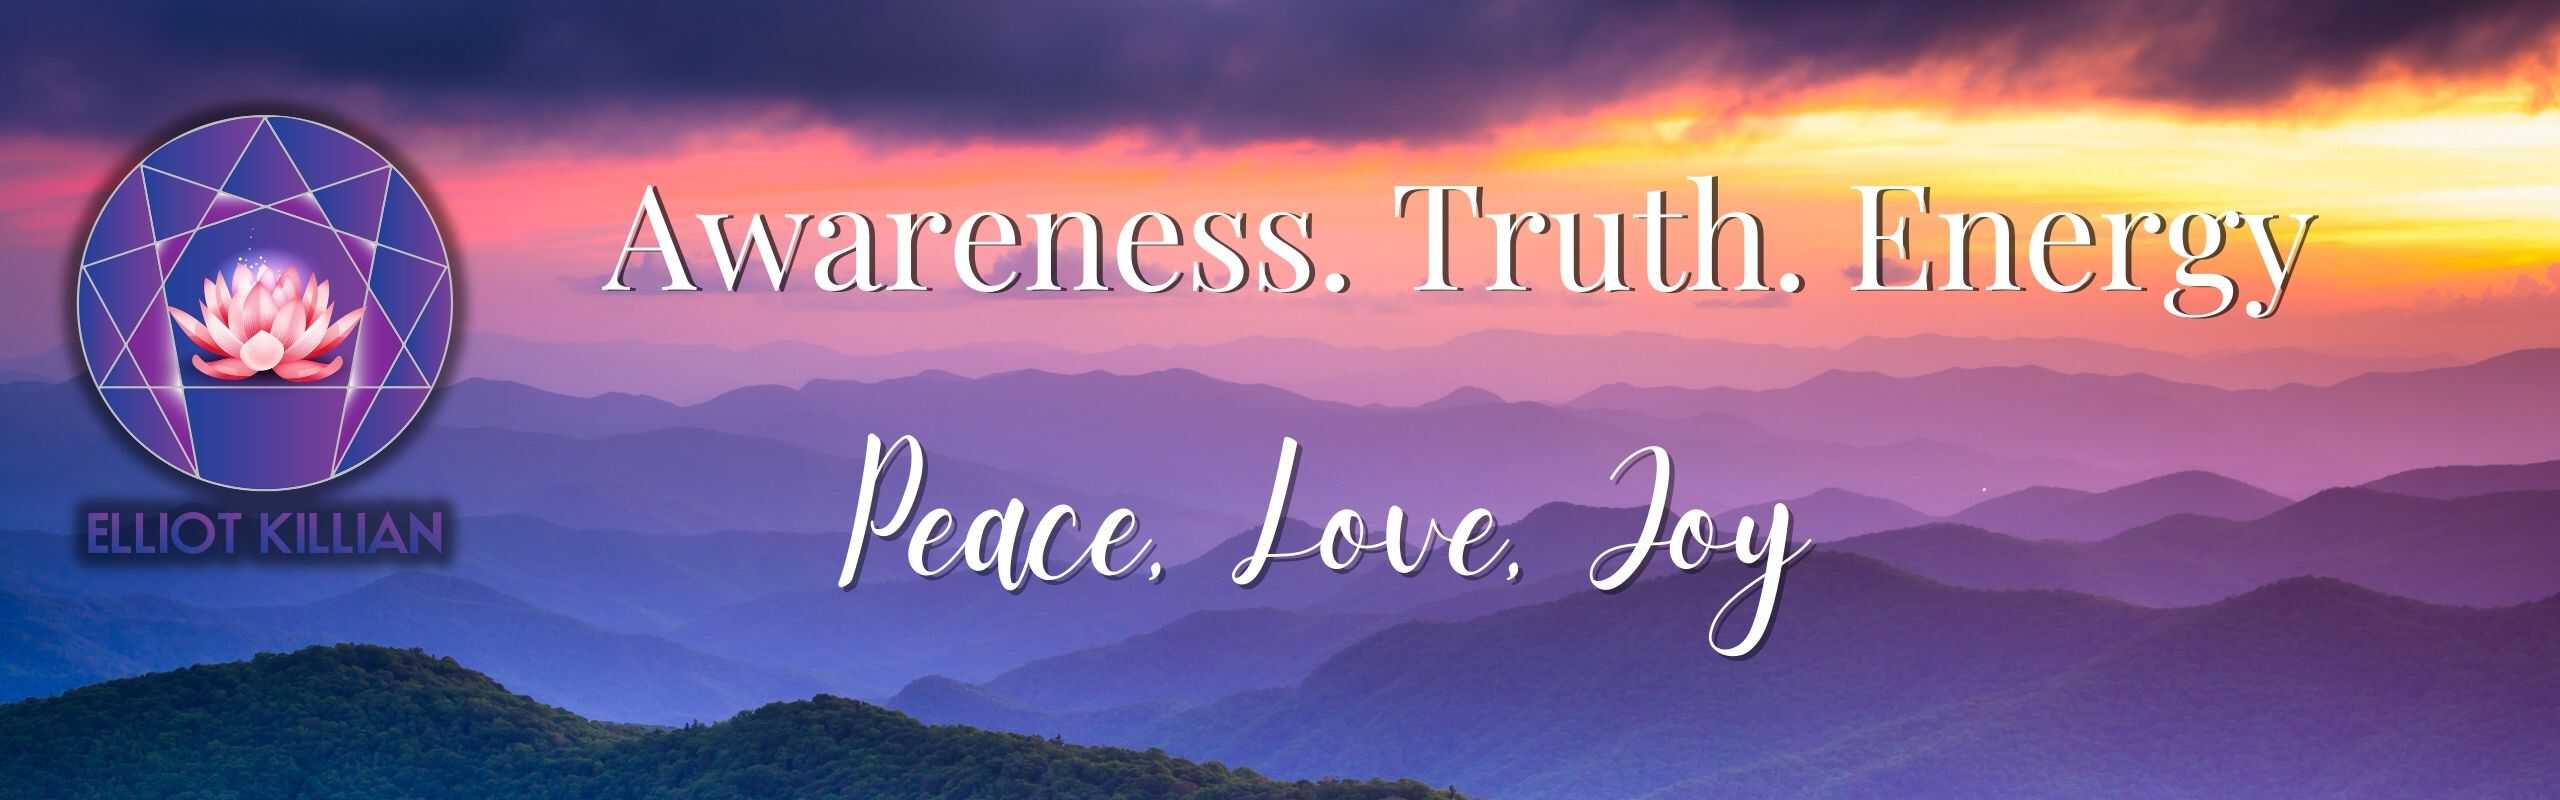 Elliot Killian, Enneagram. Awareness Truth Energy Peace Love Joy